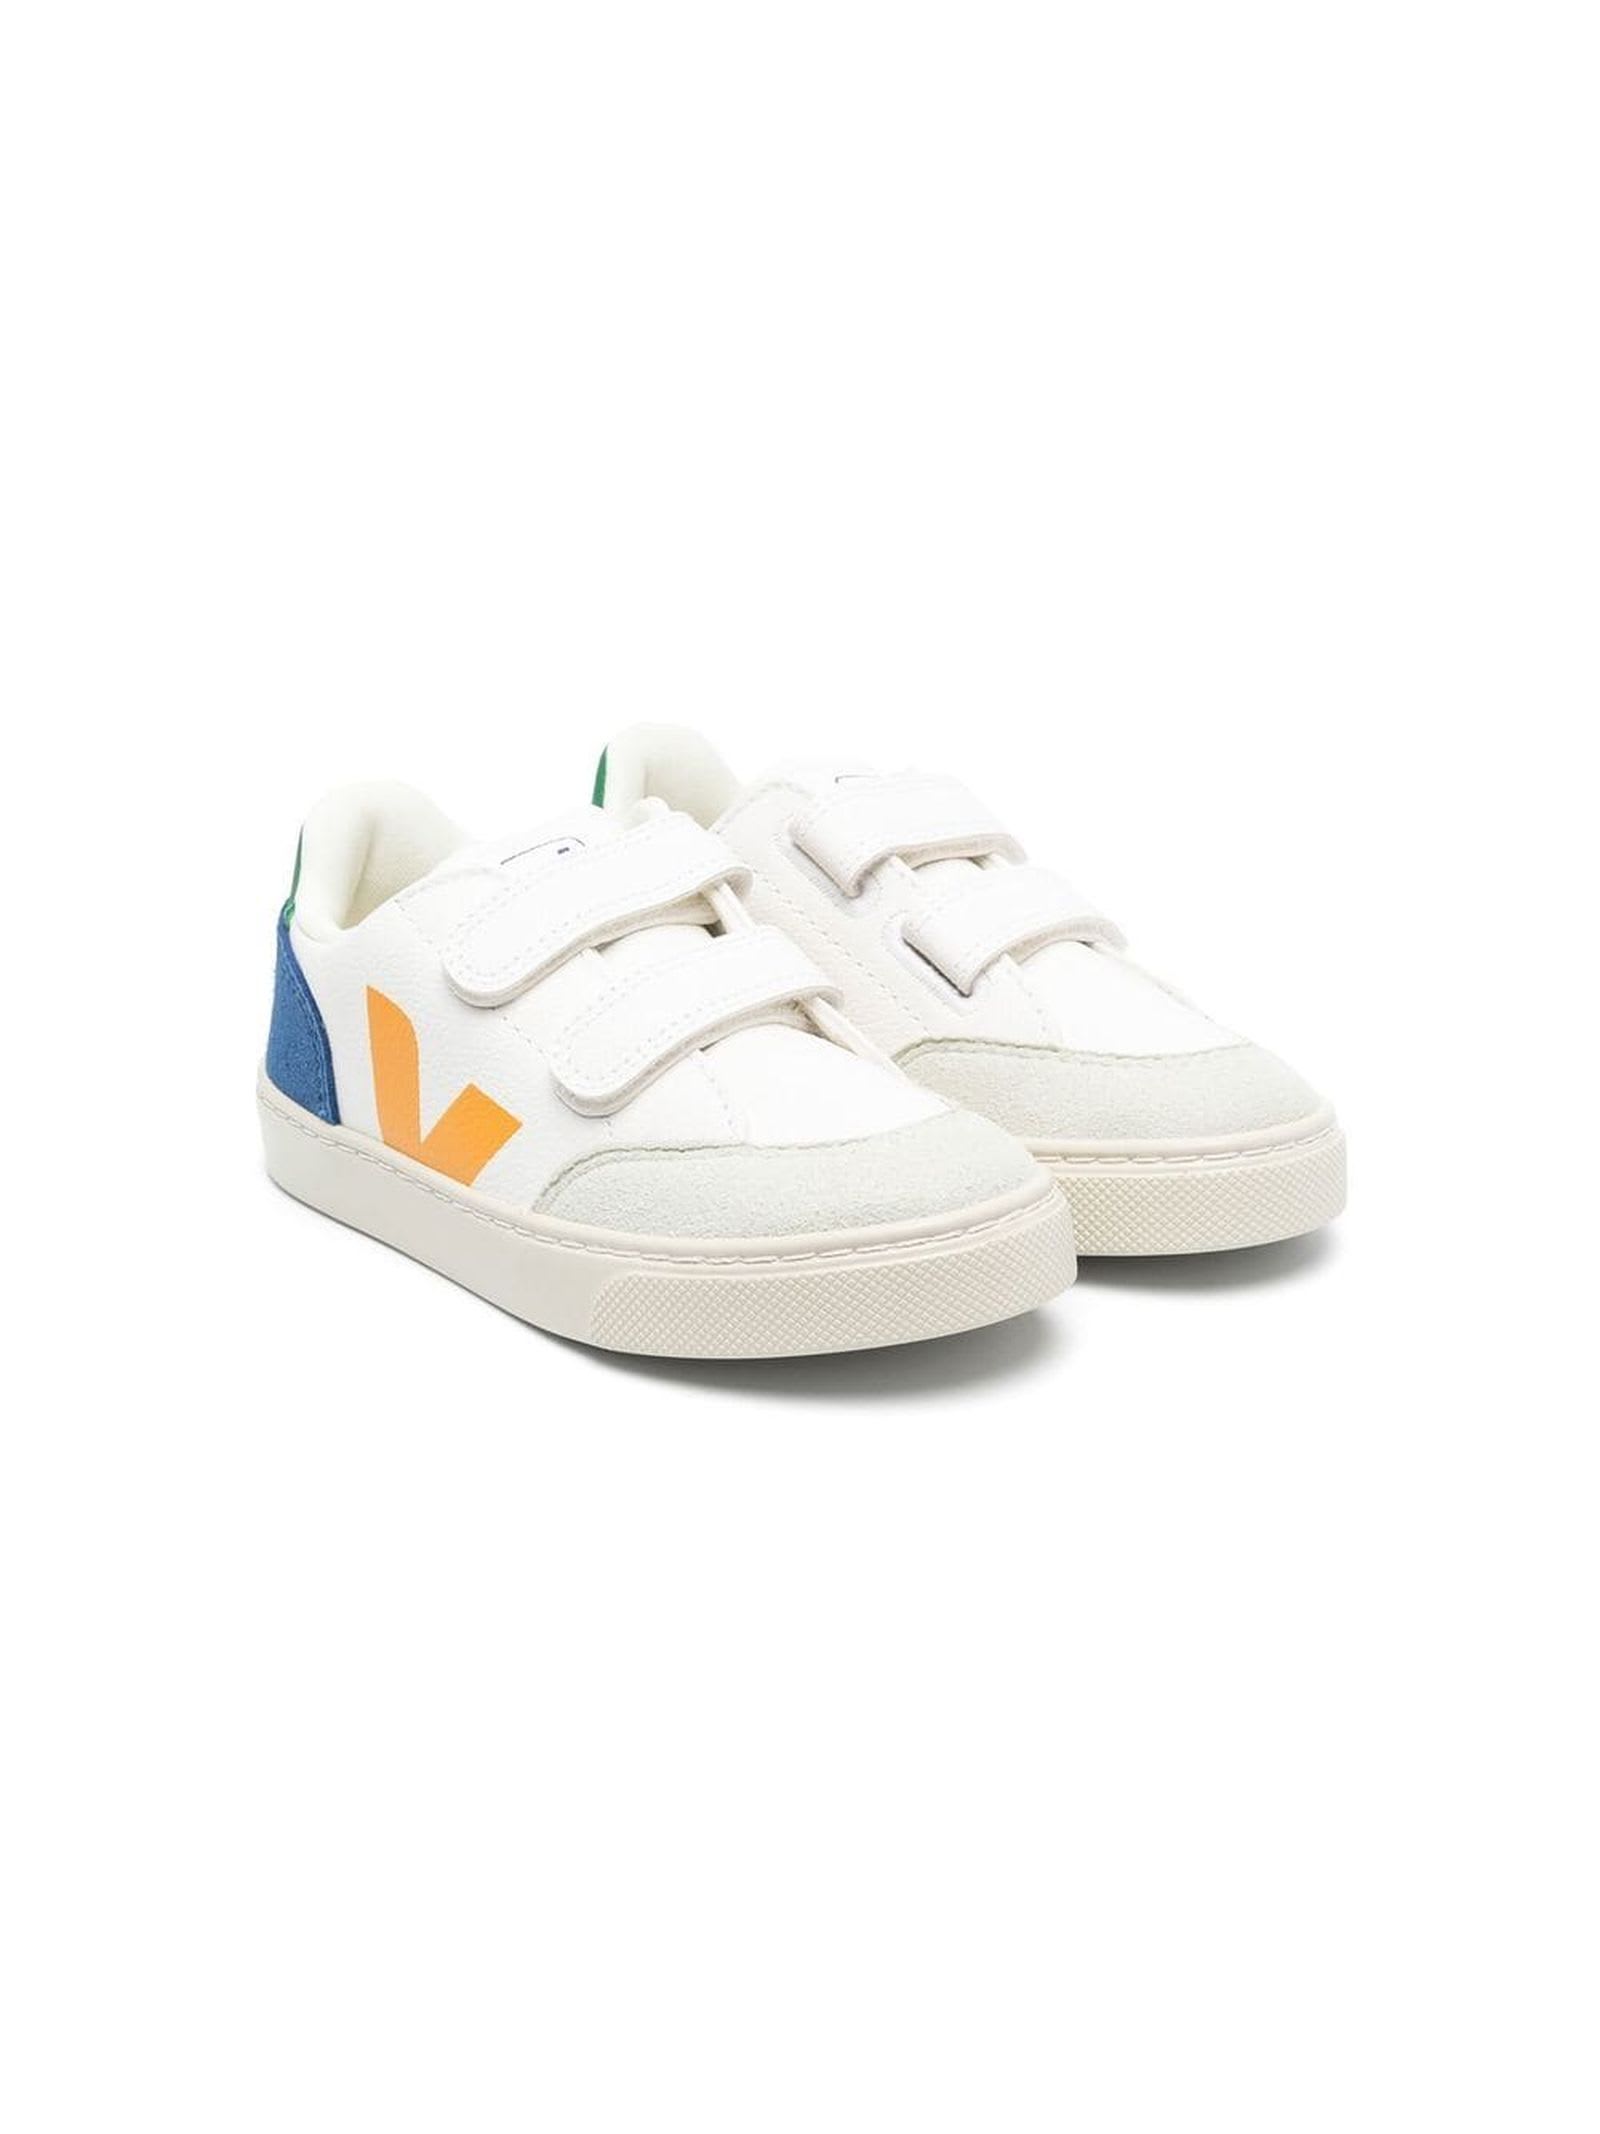 Veja Kids' White Fabric Sneakers In Bianco+giallo